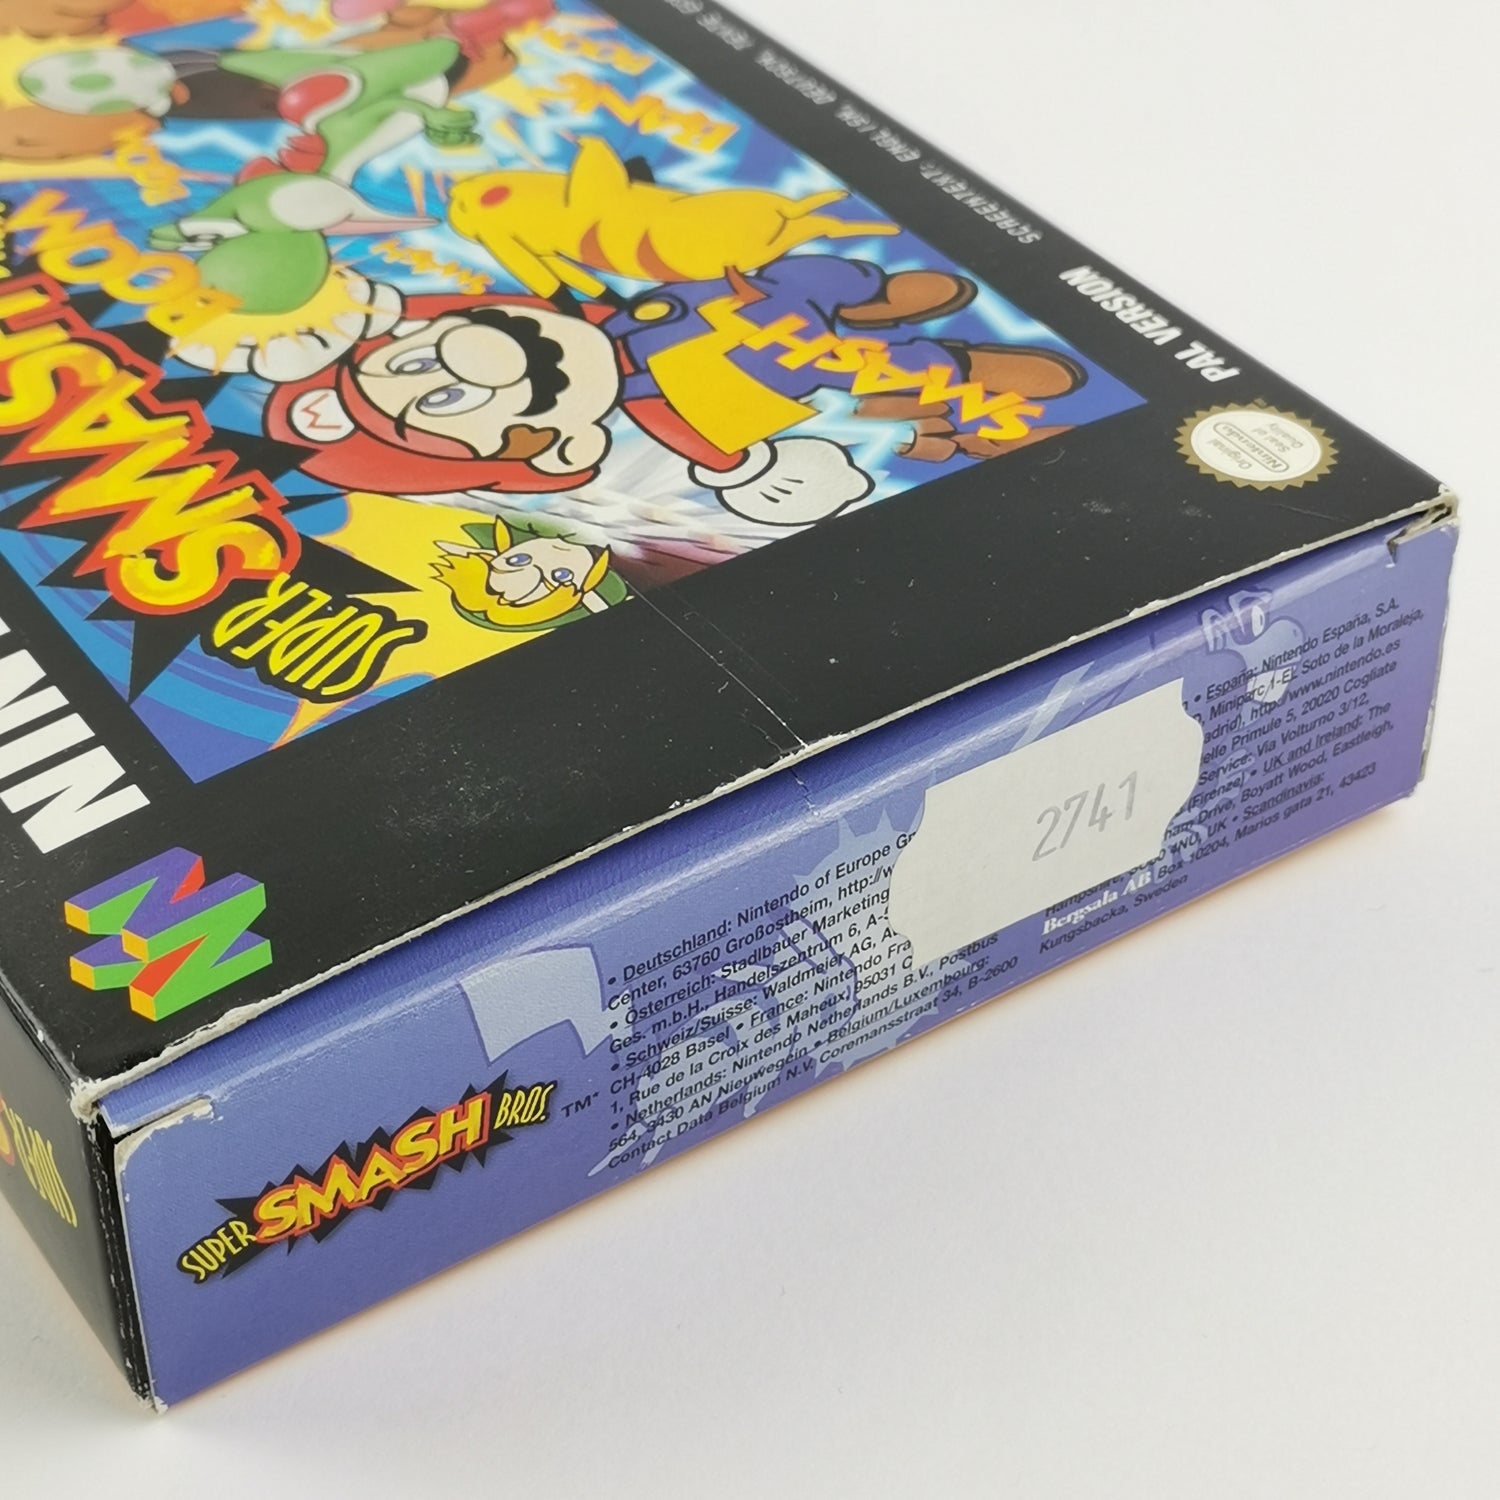 Nintendo 64 game: Super Smash Bros. - original packaging and instructions PAL version | N64